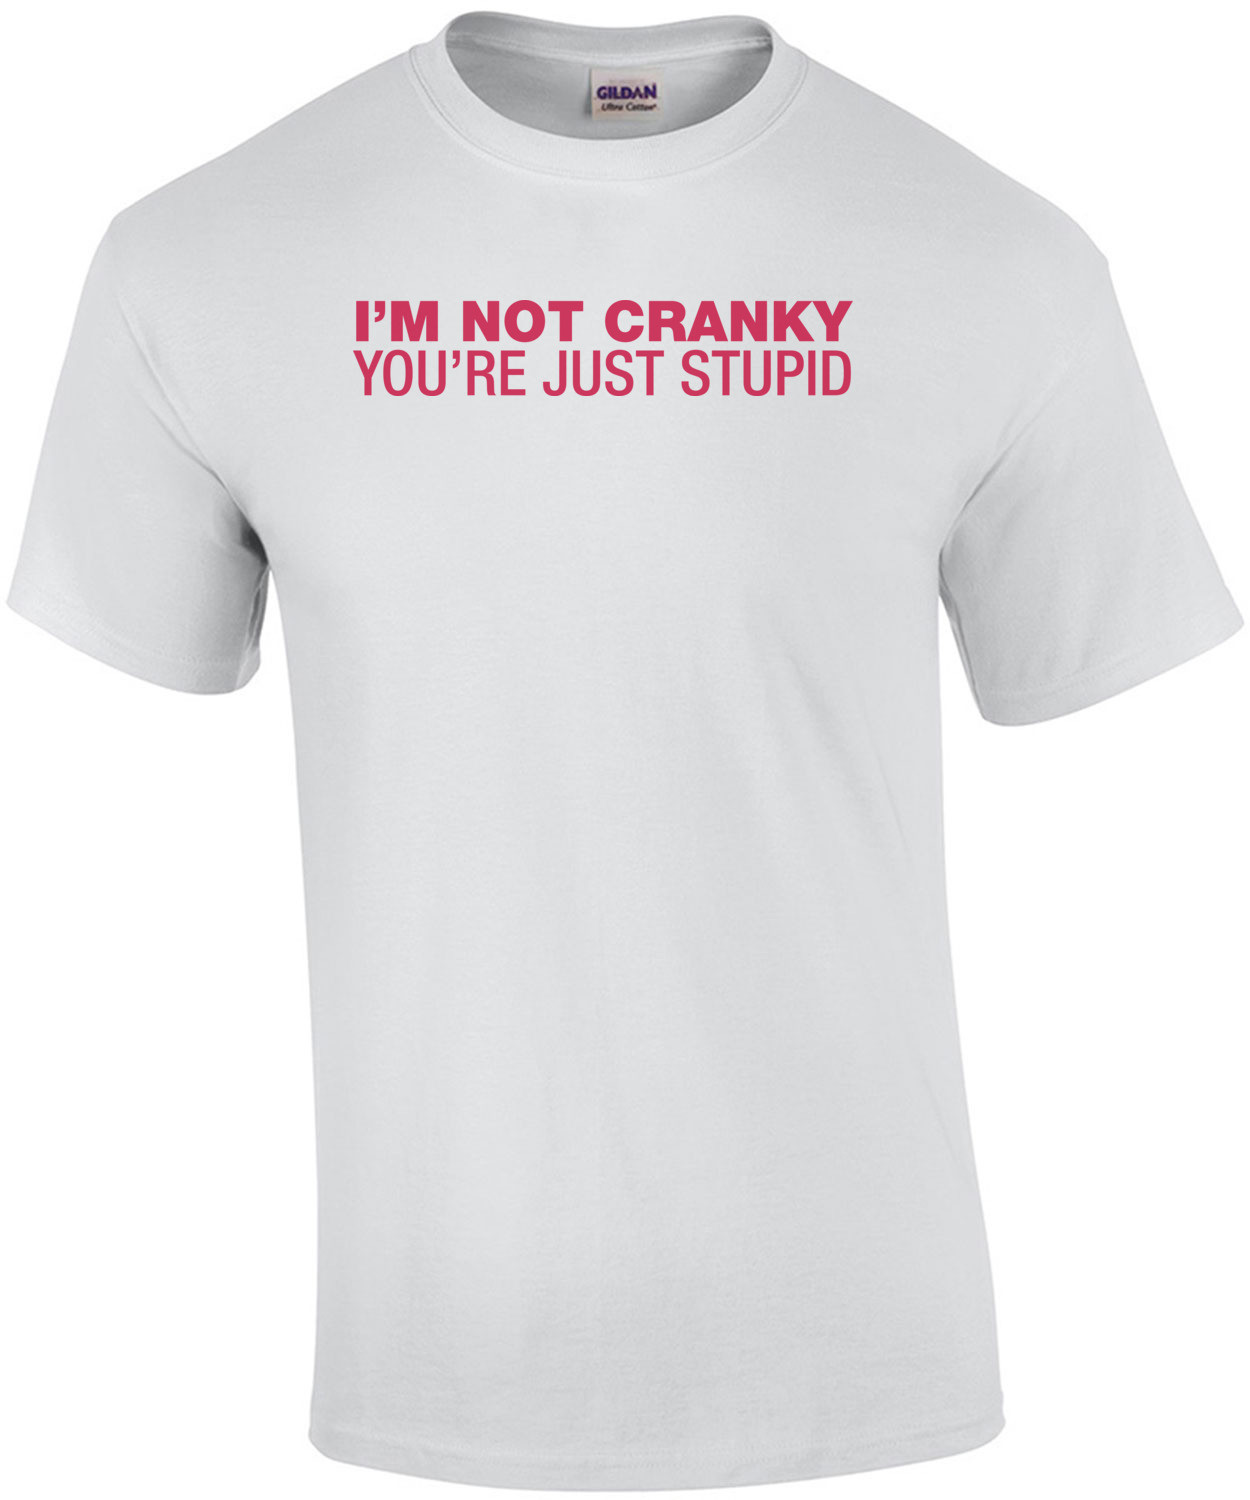 I'm Not Cranky, You're Just Stupid Shirt shirt